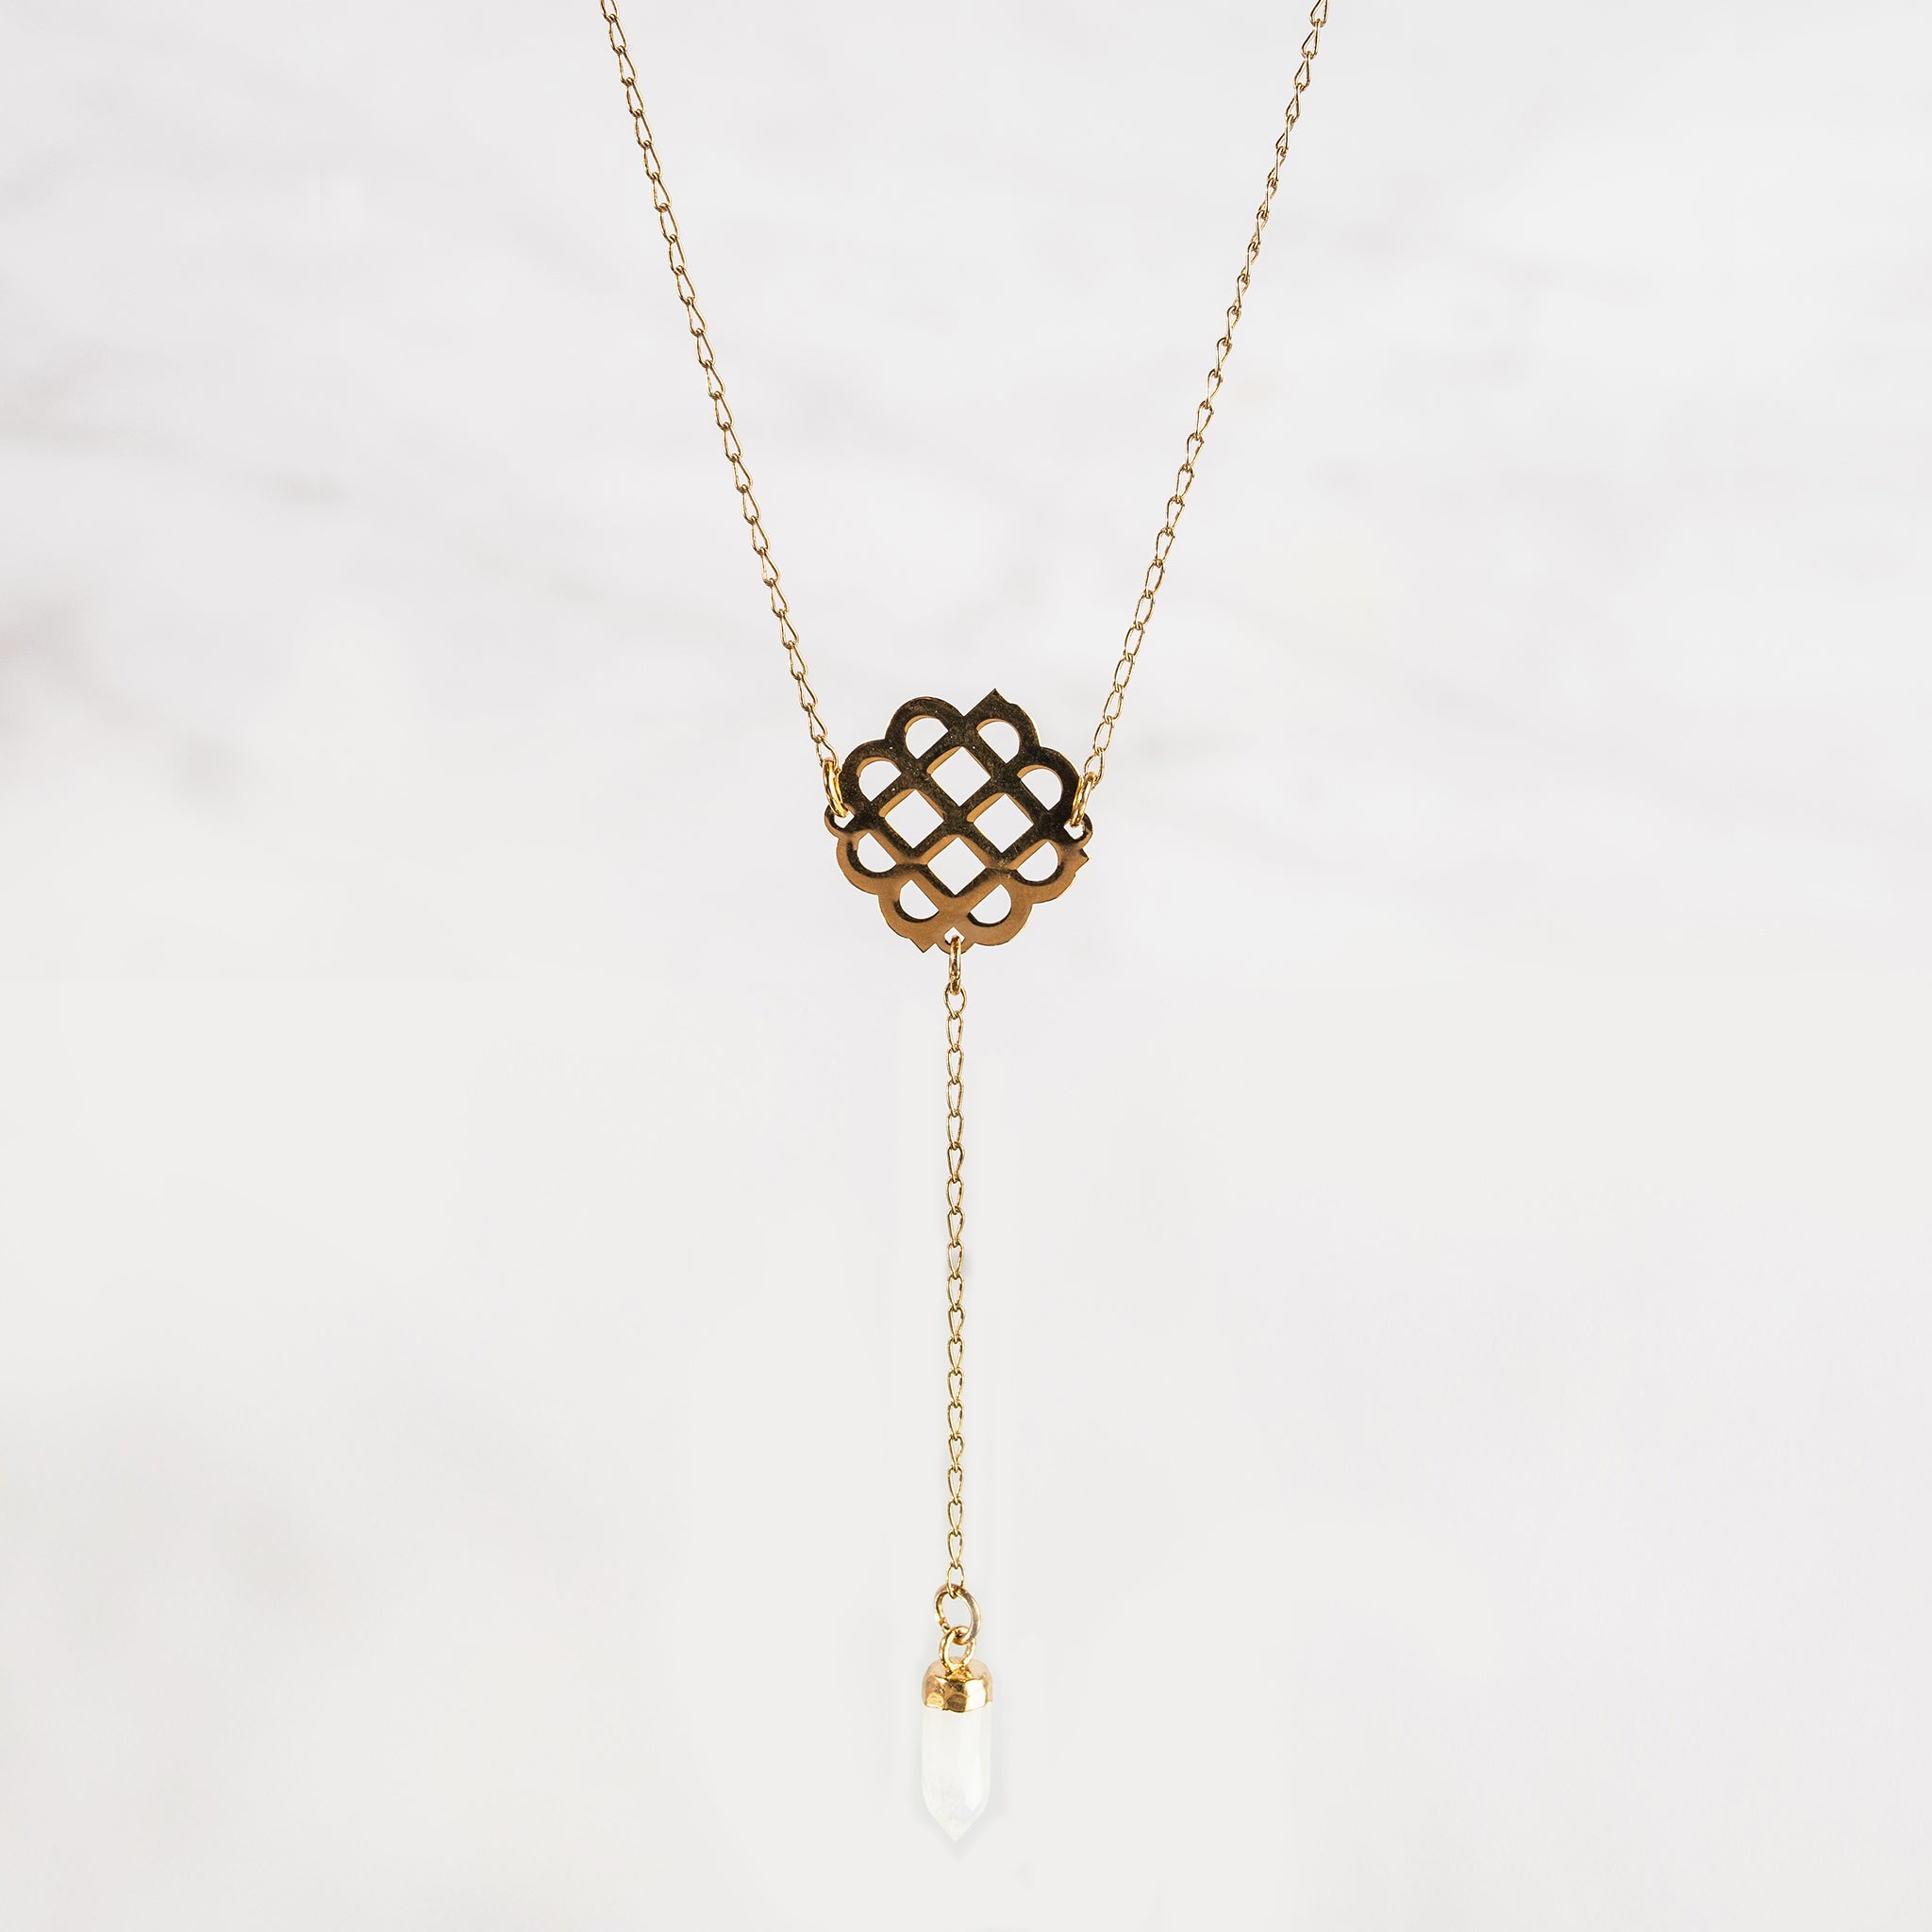 Millié Jewelry - Millié Jewelry - Millié Stone Lariat Necklace - Collares - Diseño Mexicano - Hecho en México